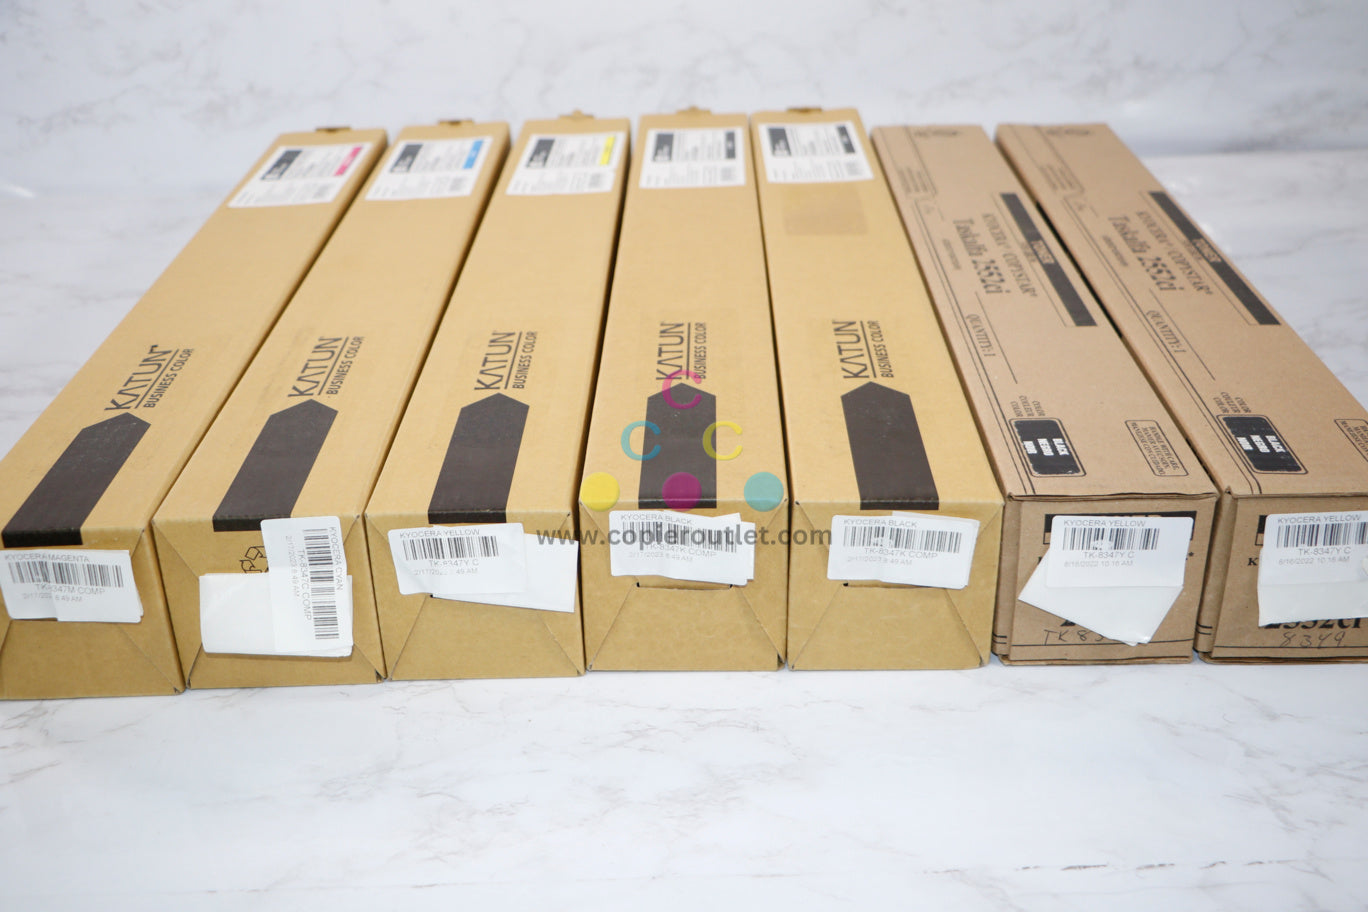 7 New Compatible Kyocera TASKalfa 2552ci,2553ci TK-8347/TK-8349 CMYK Toners